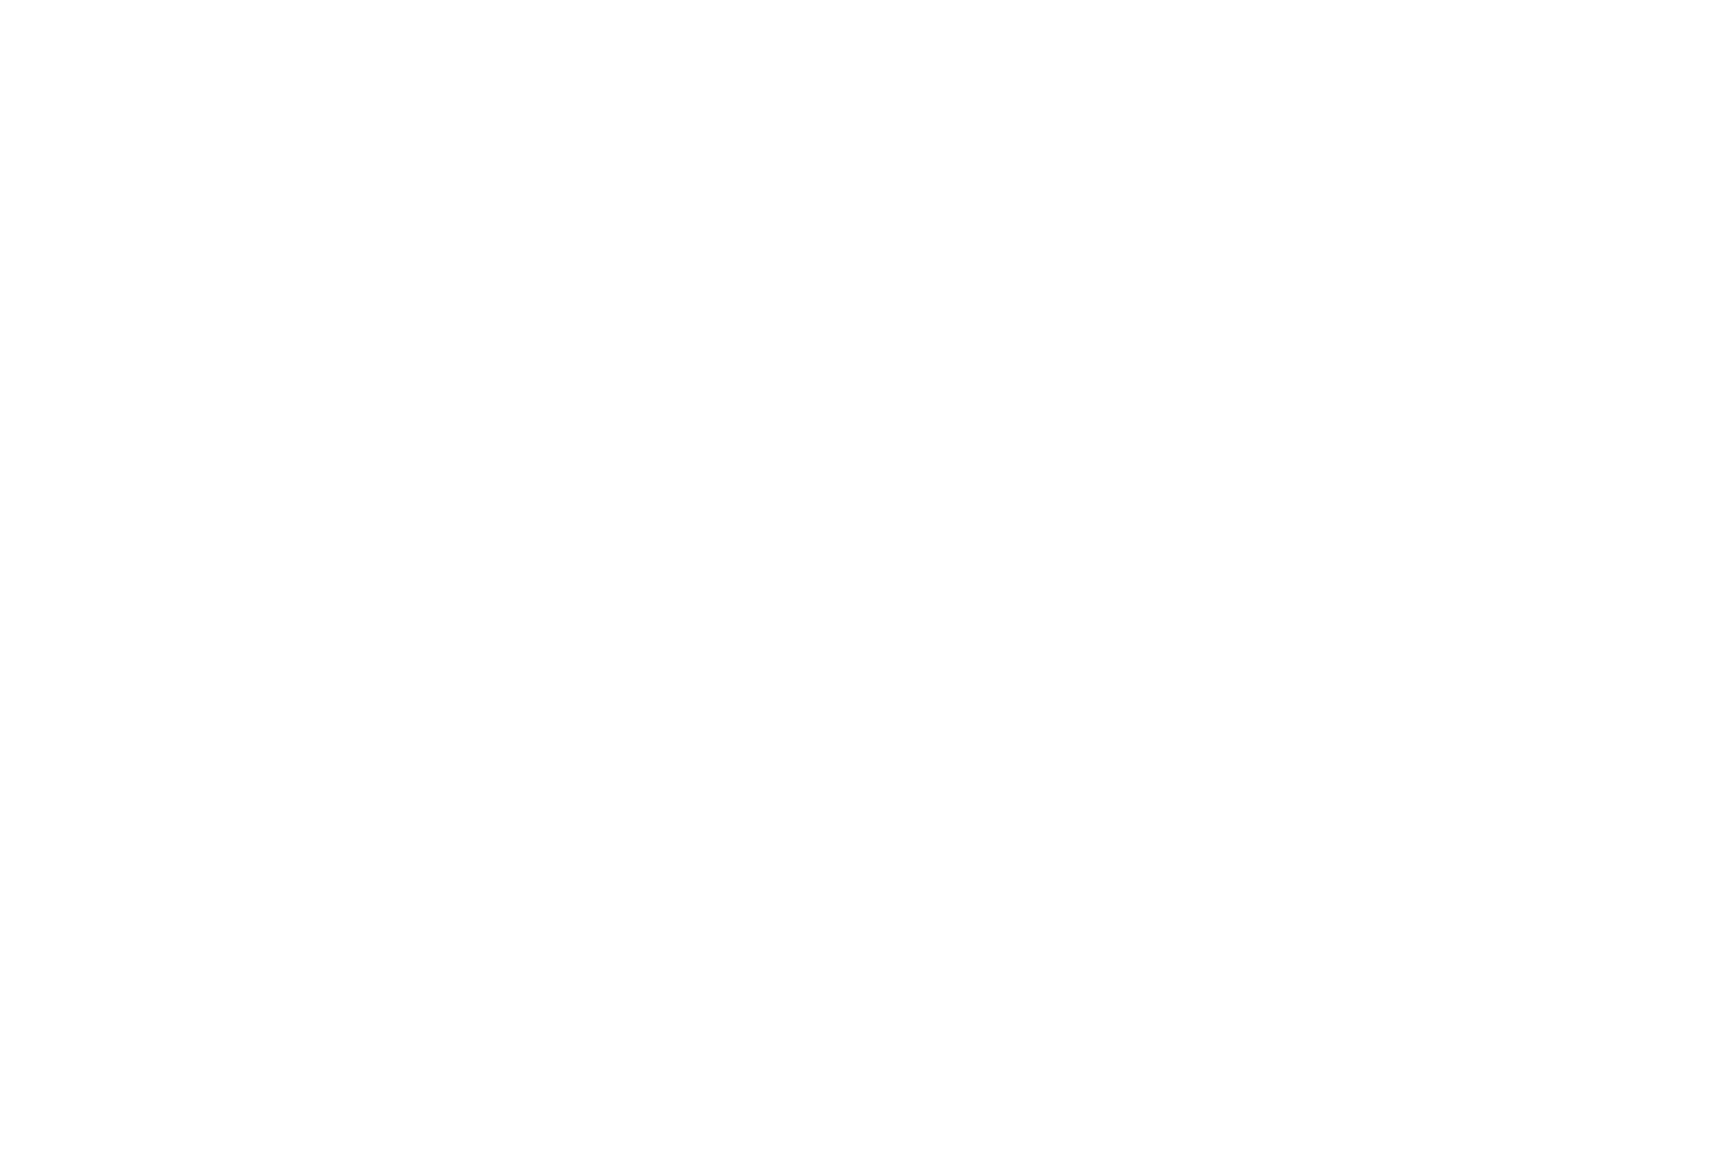 BEST FEMALE CINEMATOGRAPHER - Toronto International Women Film Festival - 2022